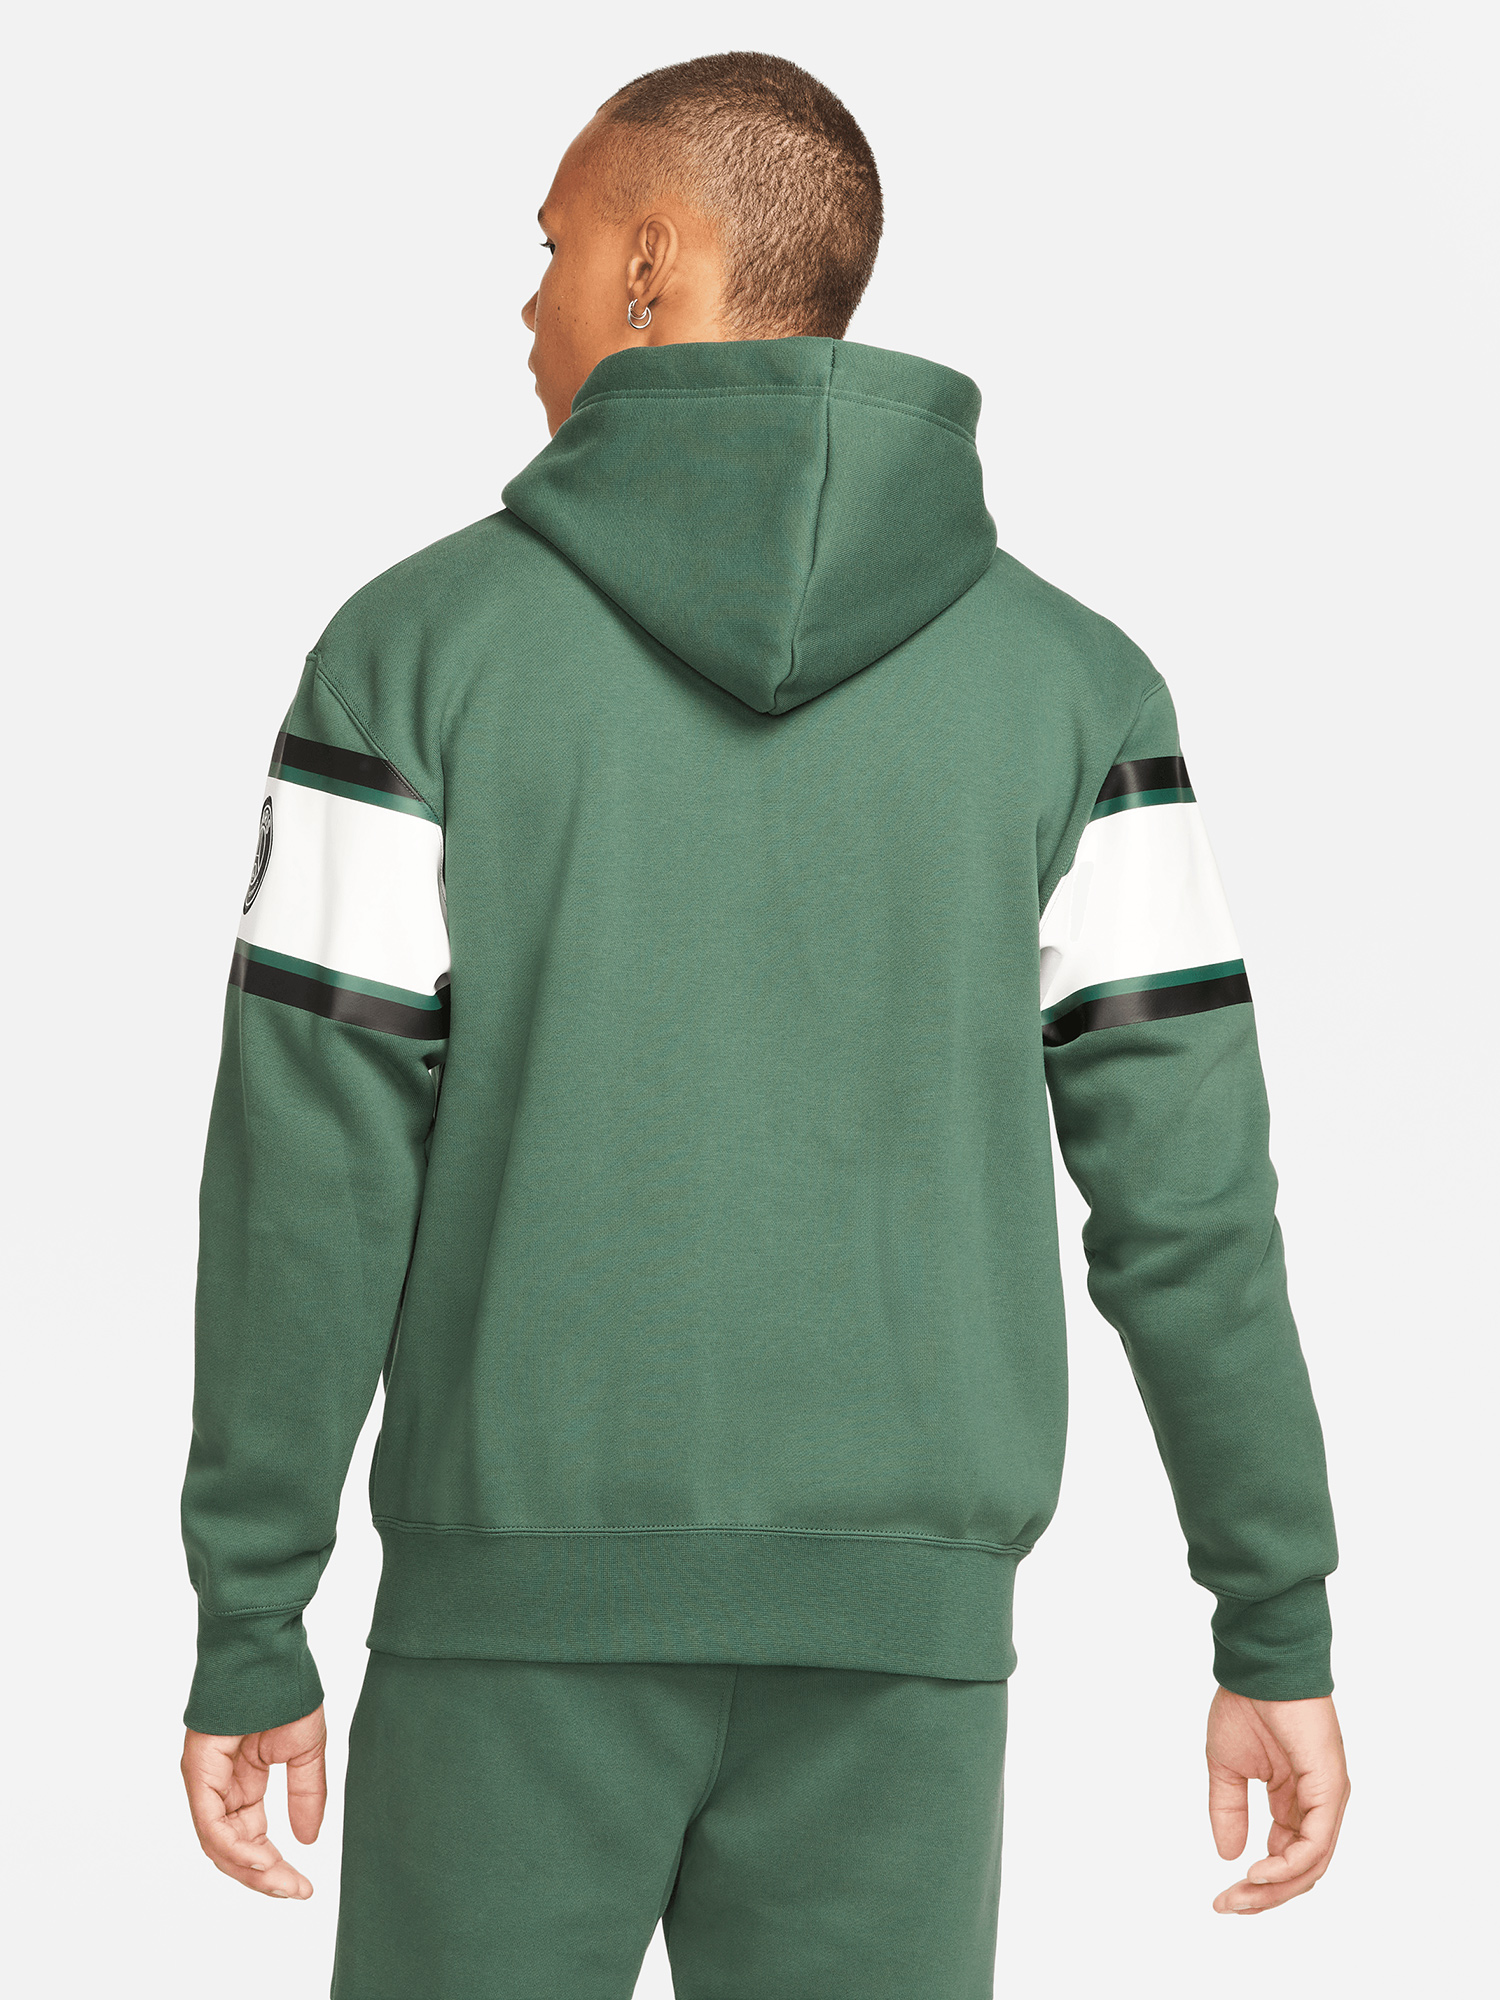 jordan-psg-paris-saint-germain-hoodie-noble-green-2